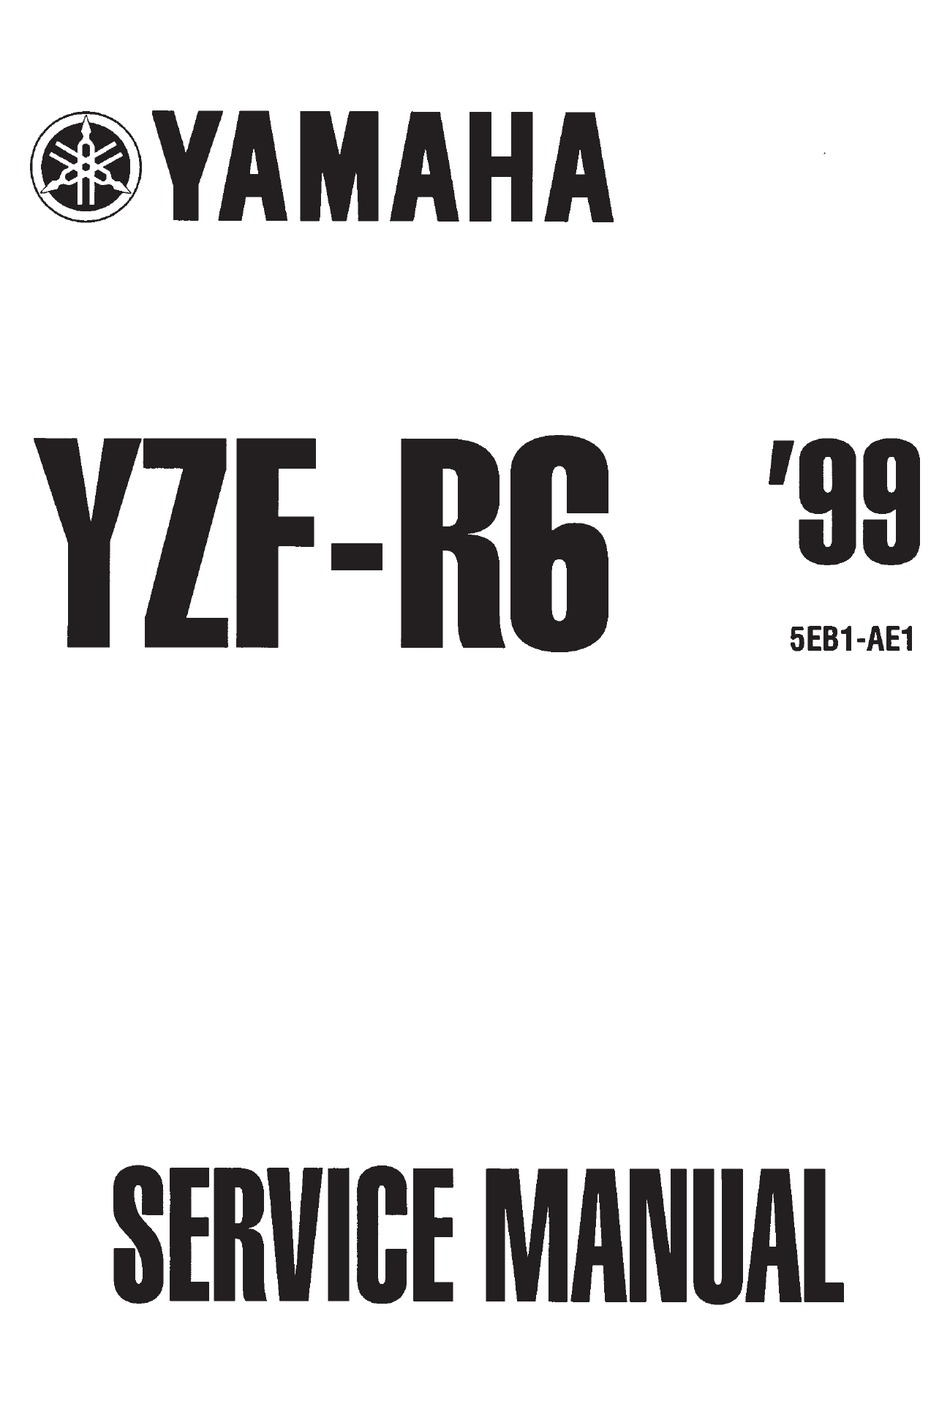 YAMAHA YZF-R6 99 SERVICE MANUAL Pdf Download | ManualsLib  1999 Yamaha Yzf R6 Wiring Diagram    ManualsLib